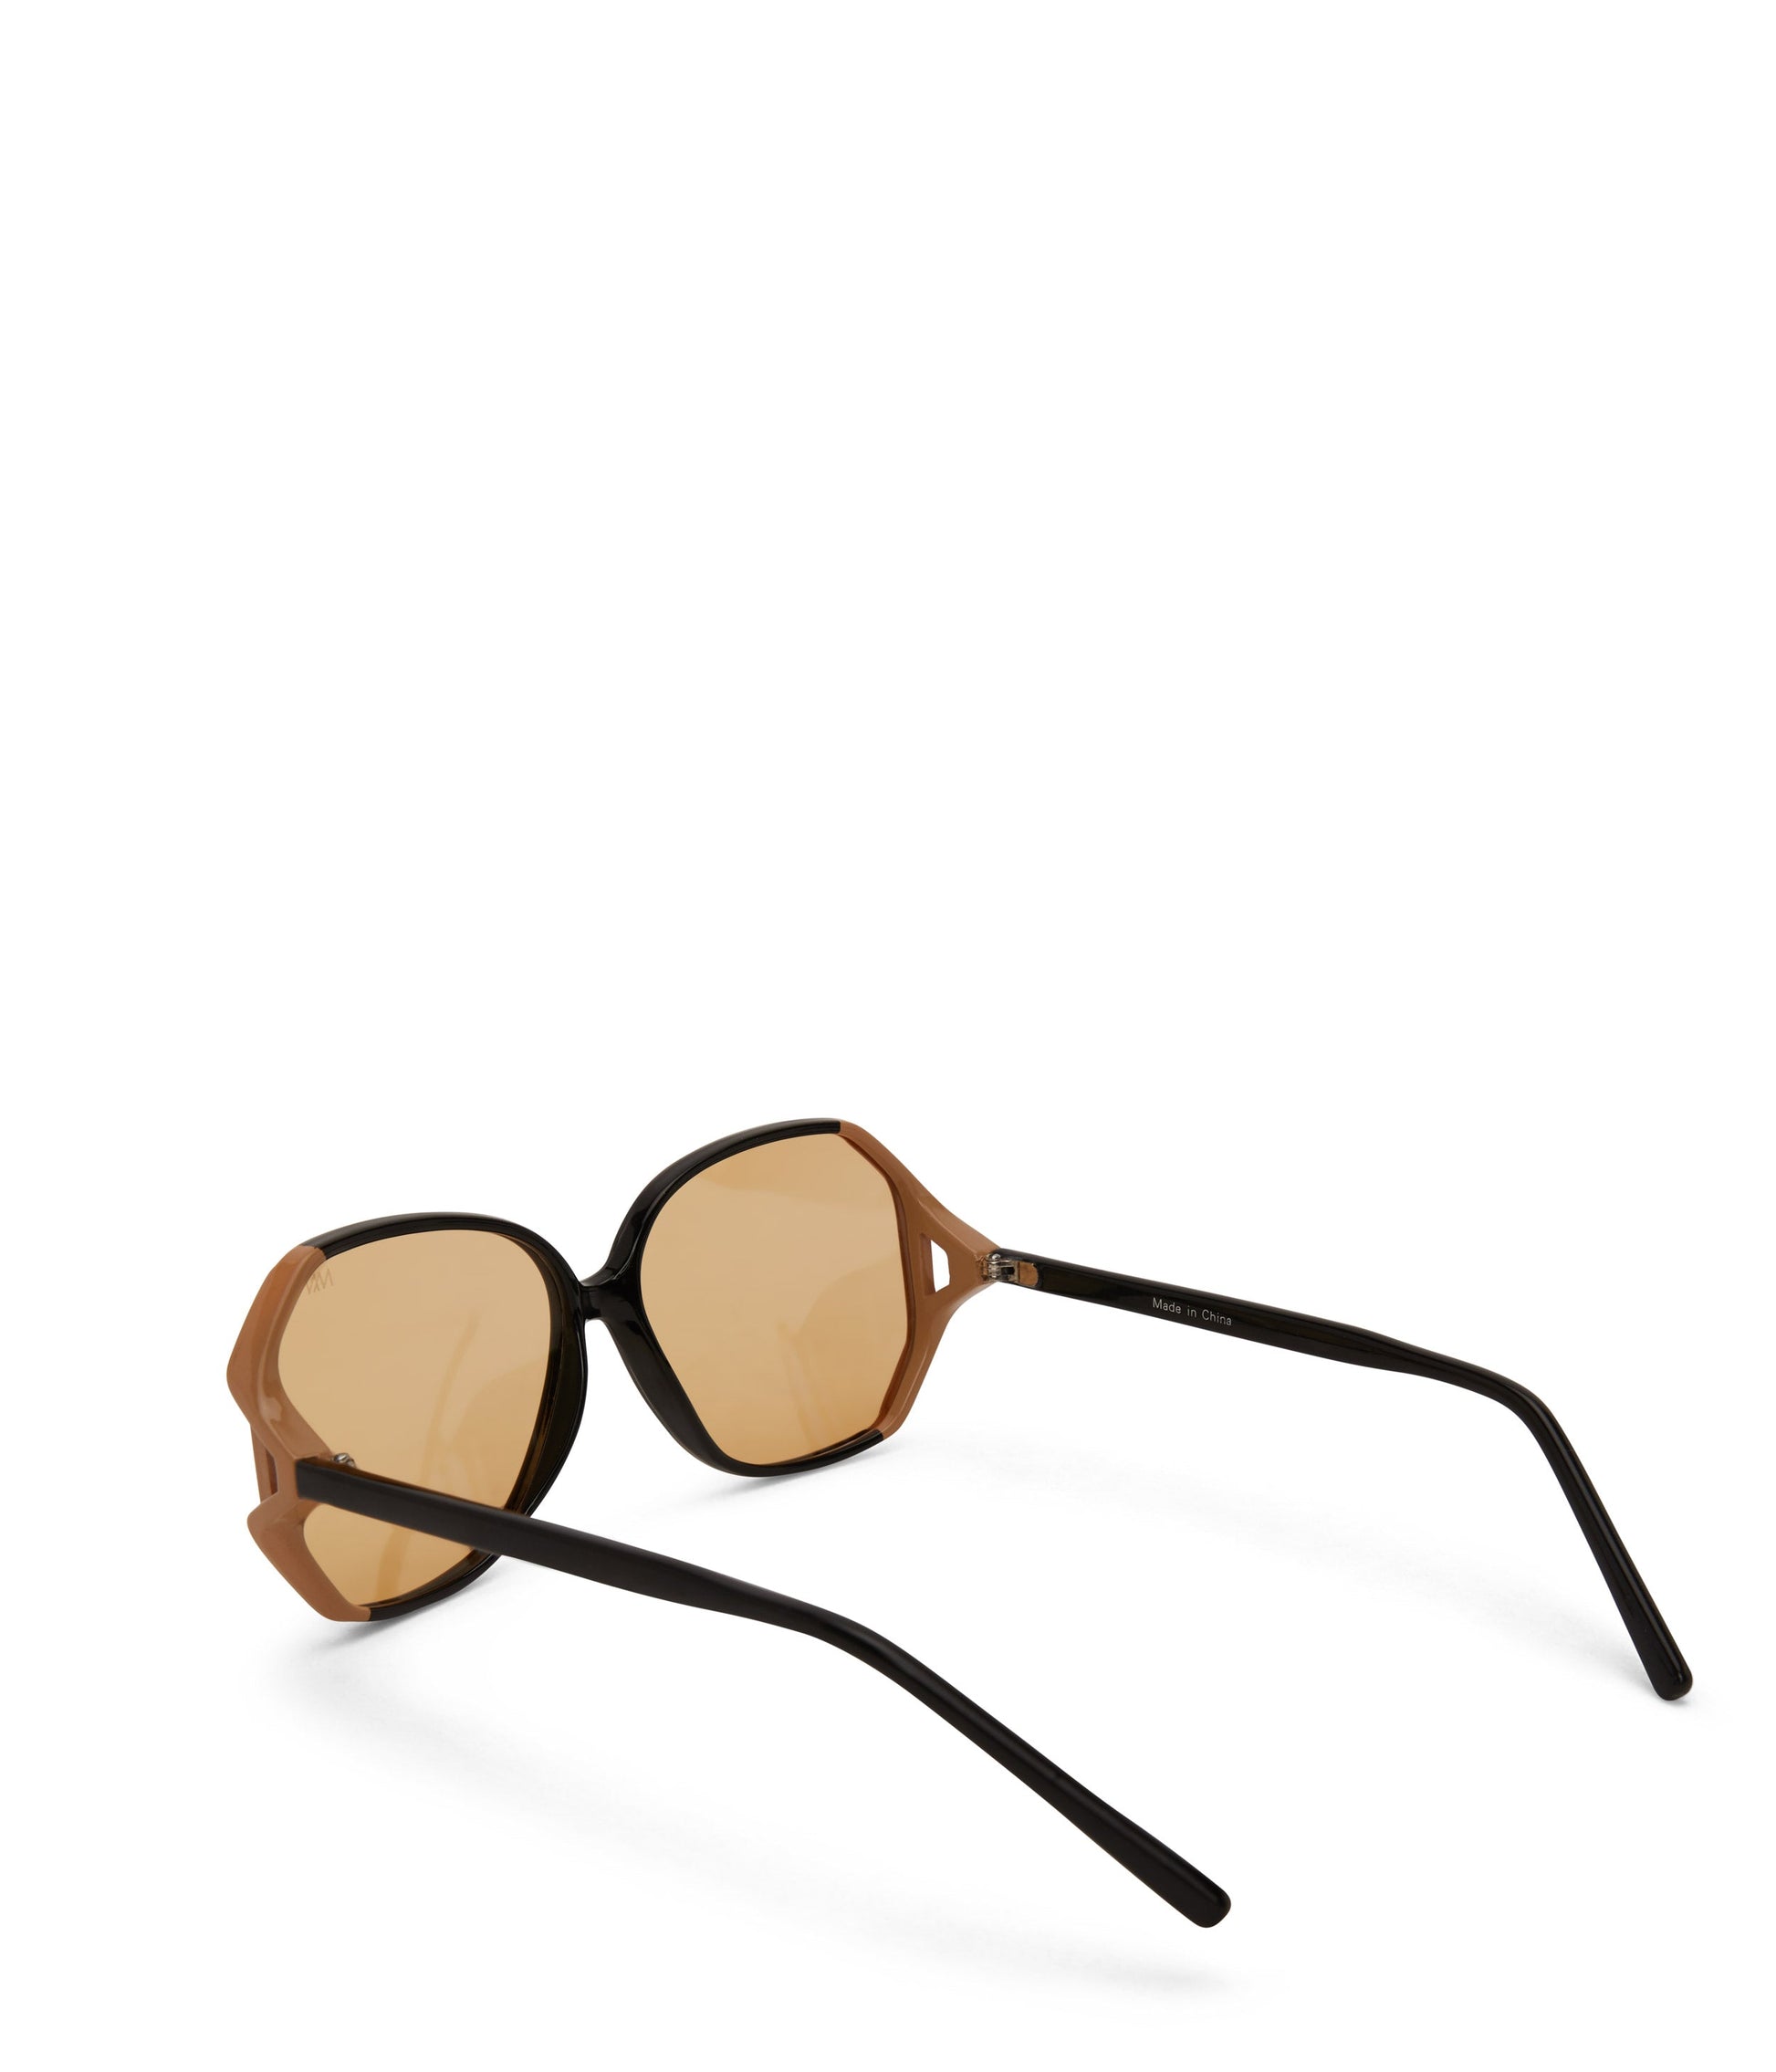 KRIS Black Hexagon Sunglasses | Color: Black - variant::black